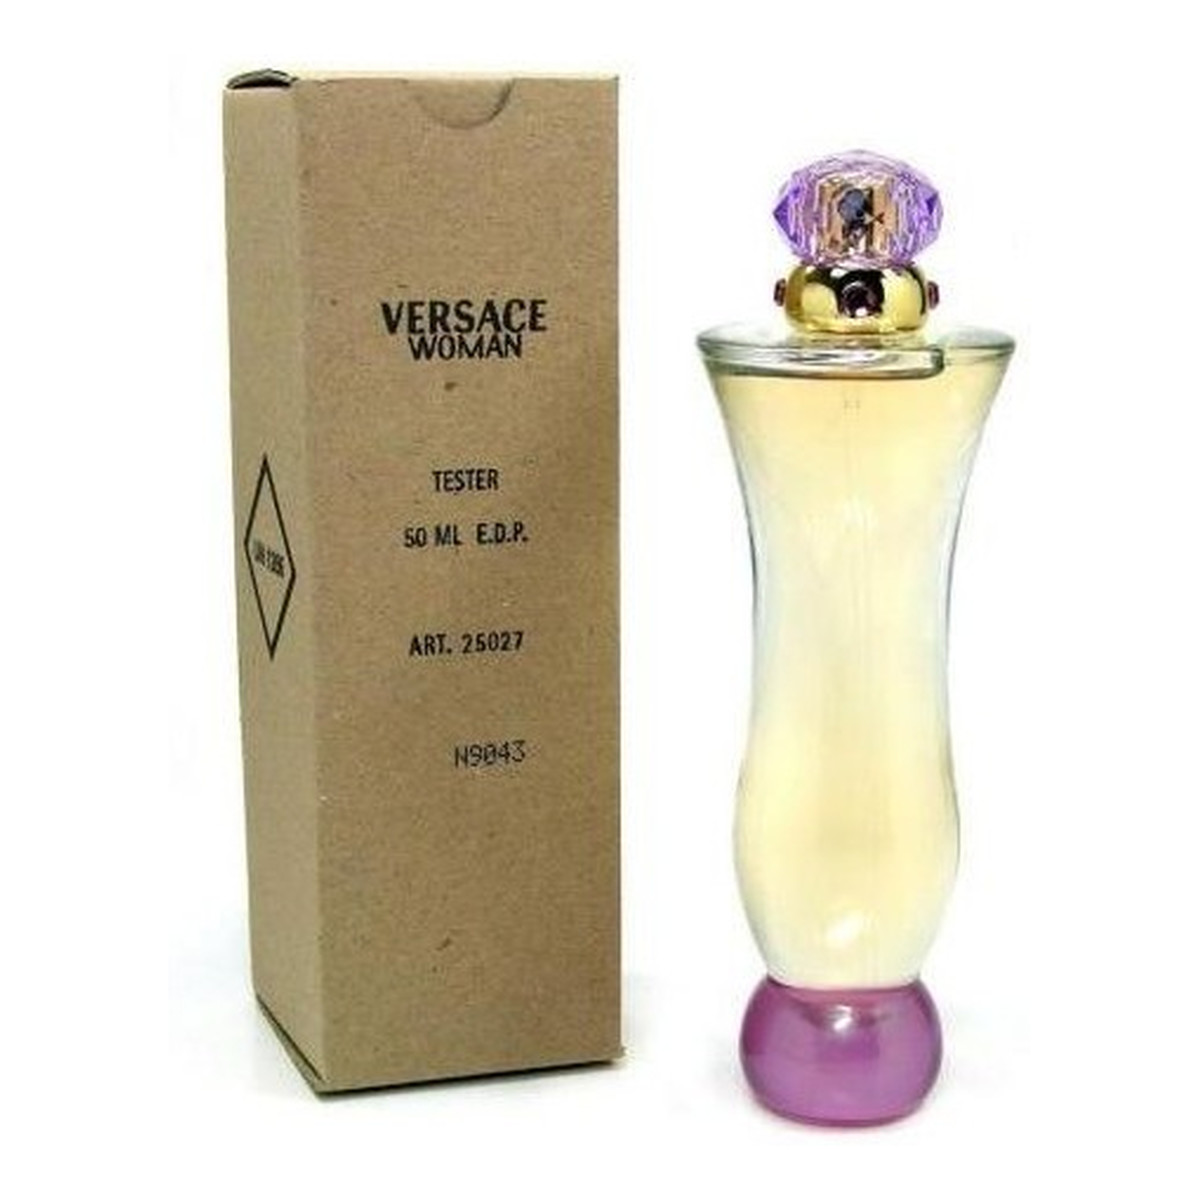 Versace Woman Woda perfumowana spray TESTER 50ml